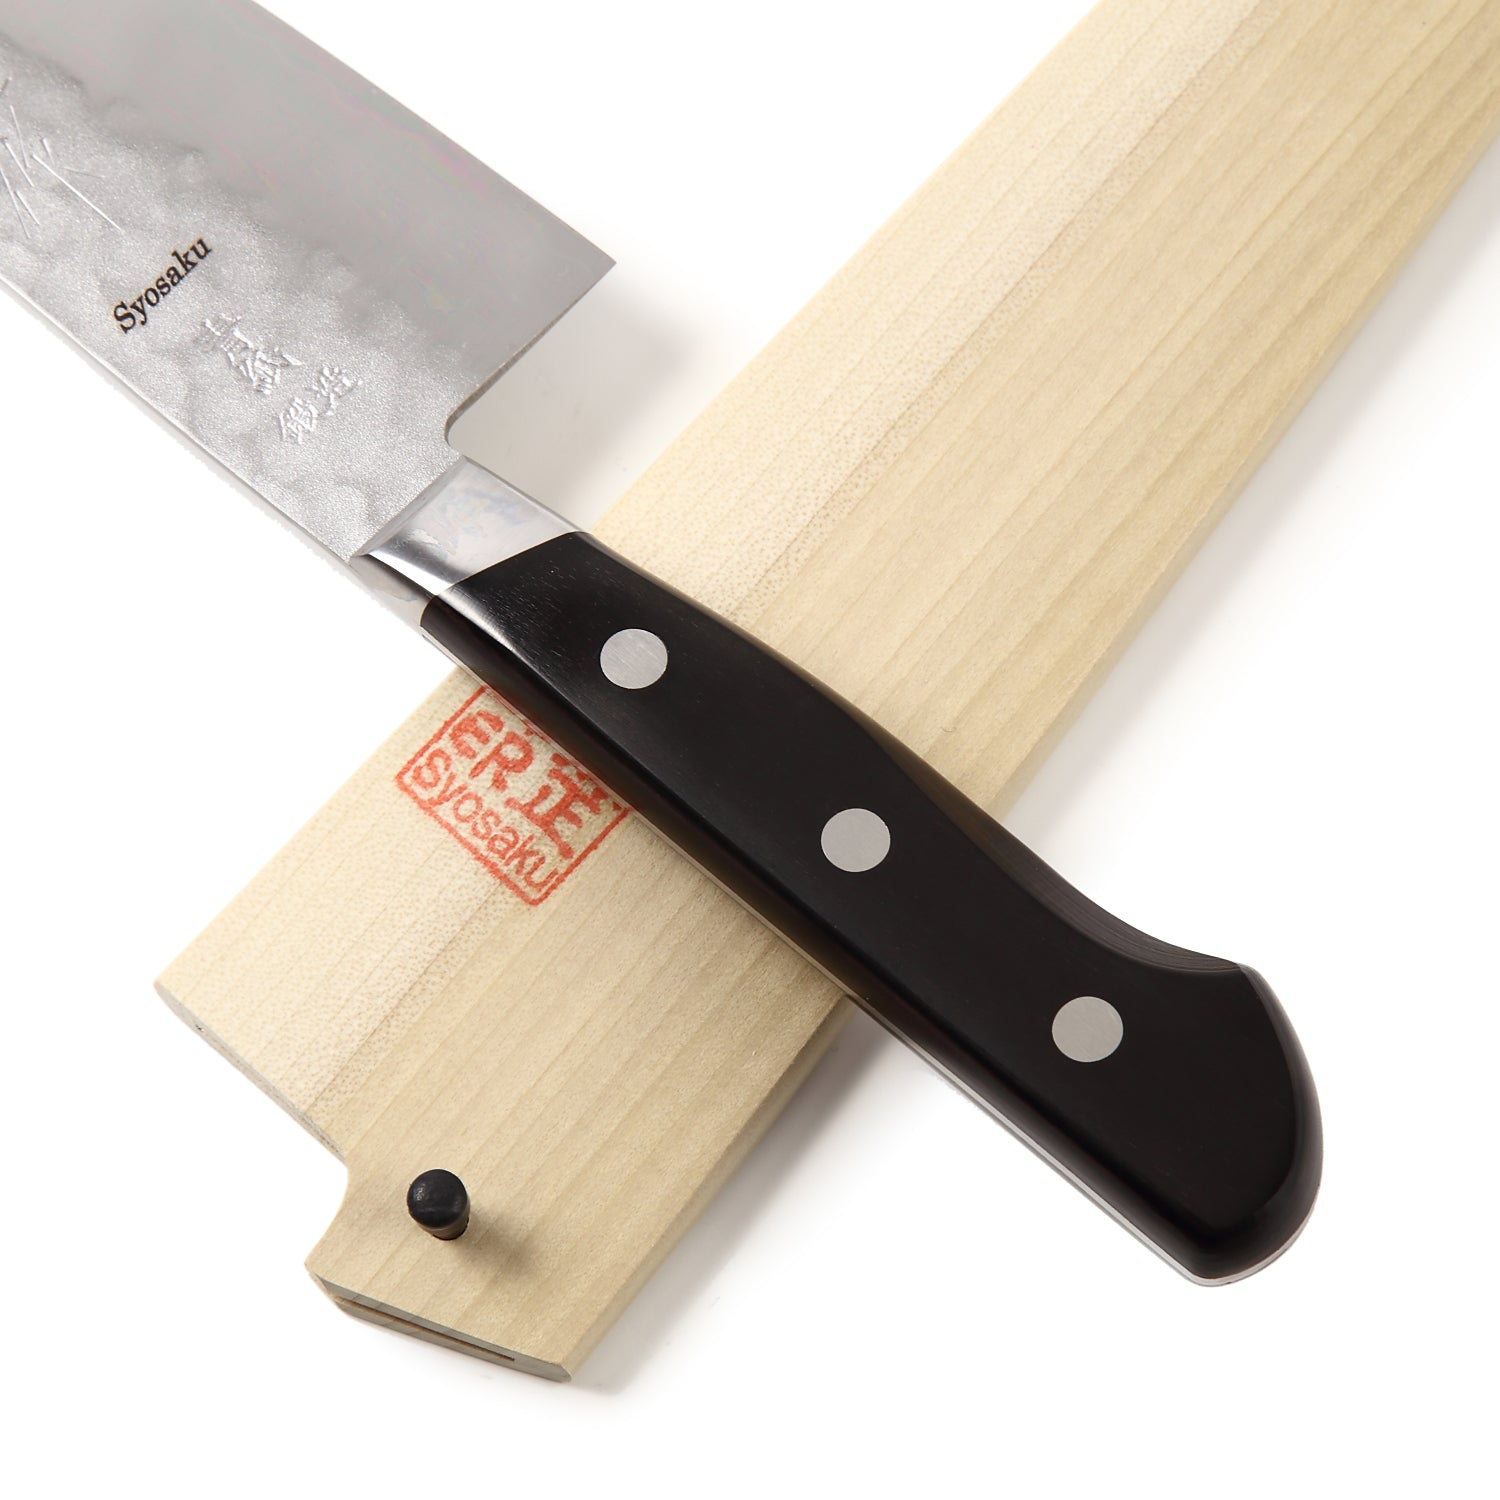 Syosaku Japanese Best Sharp Kitchen Chef Knife Aoko(Blue Steel)-No.2 Black Pakkawood Handle, Gyuto 8-inch (200mm) with Magnolia Wood Sheath Saya Cover - Syosaku-Japan